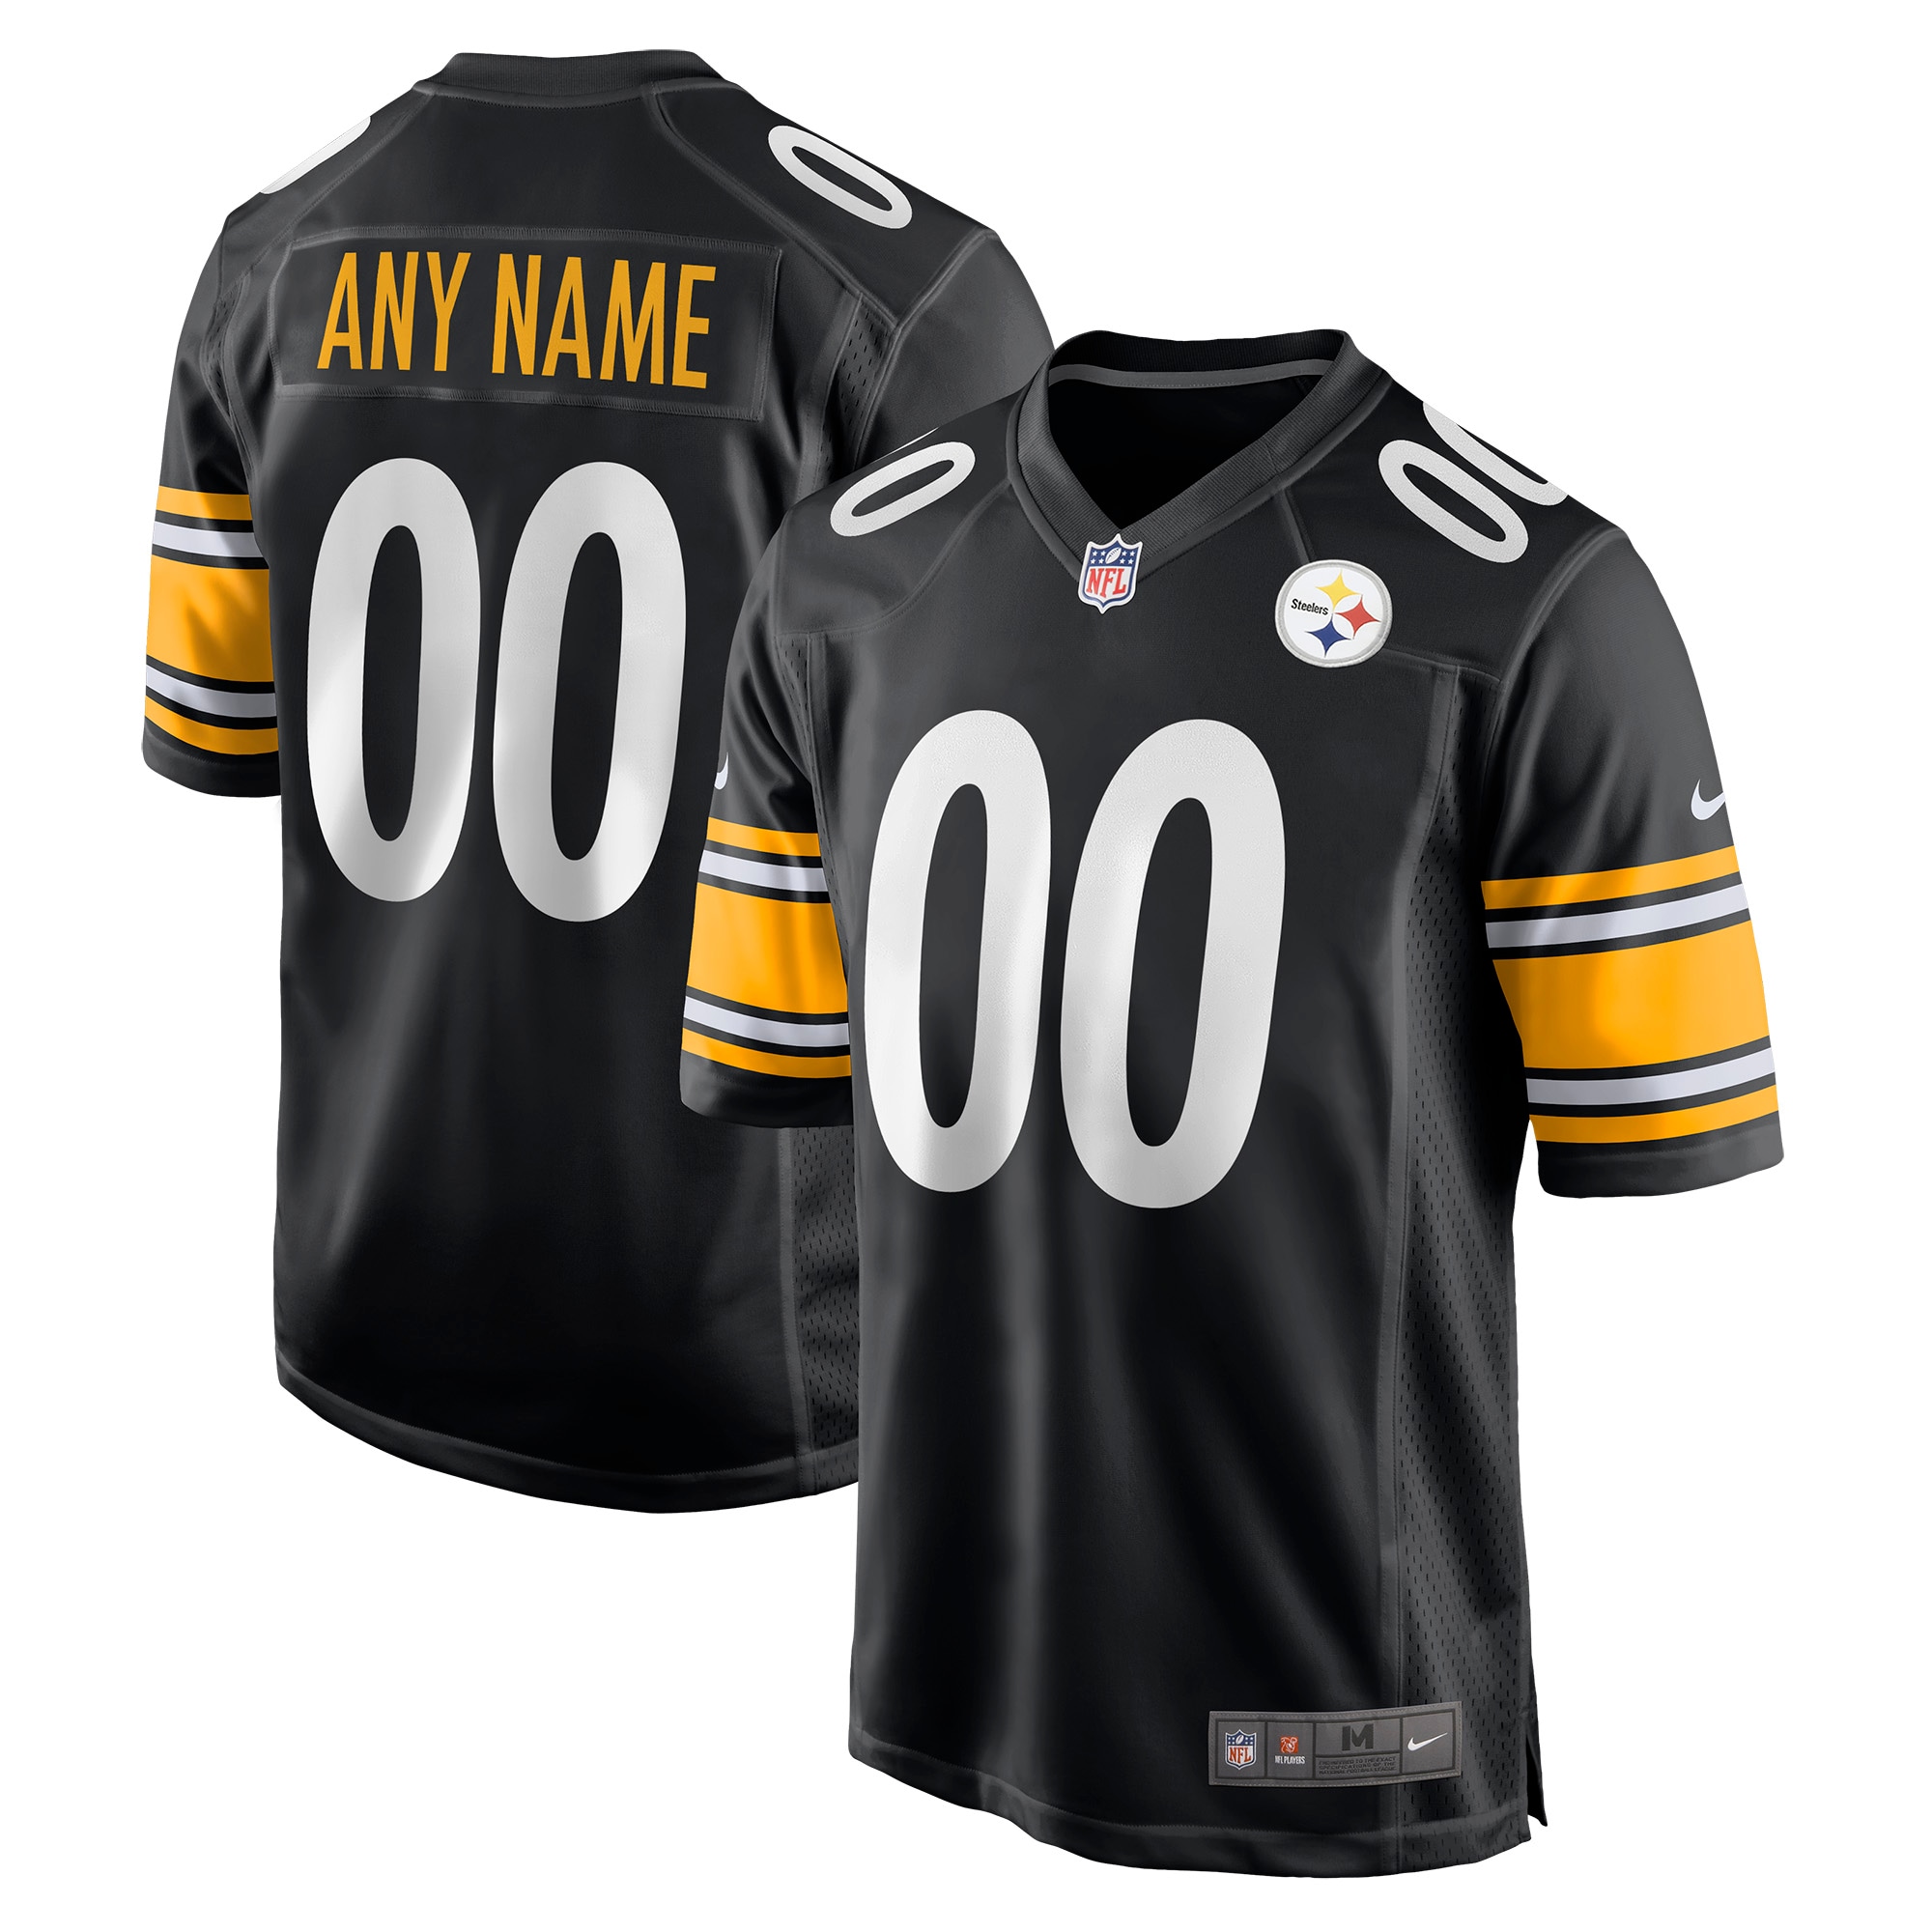 Men's Nike Black Pittsburgh Steelers Game Custom Player Jersey